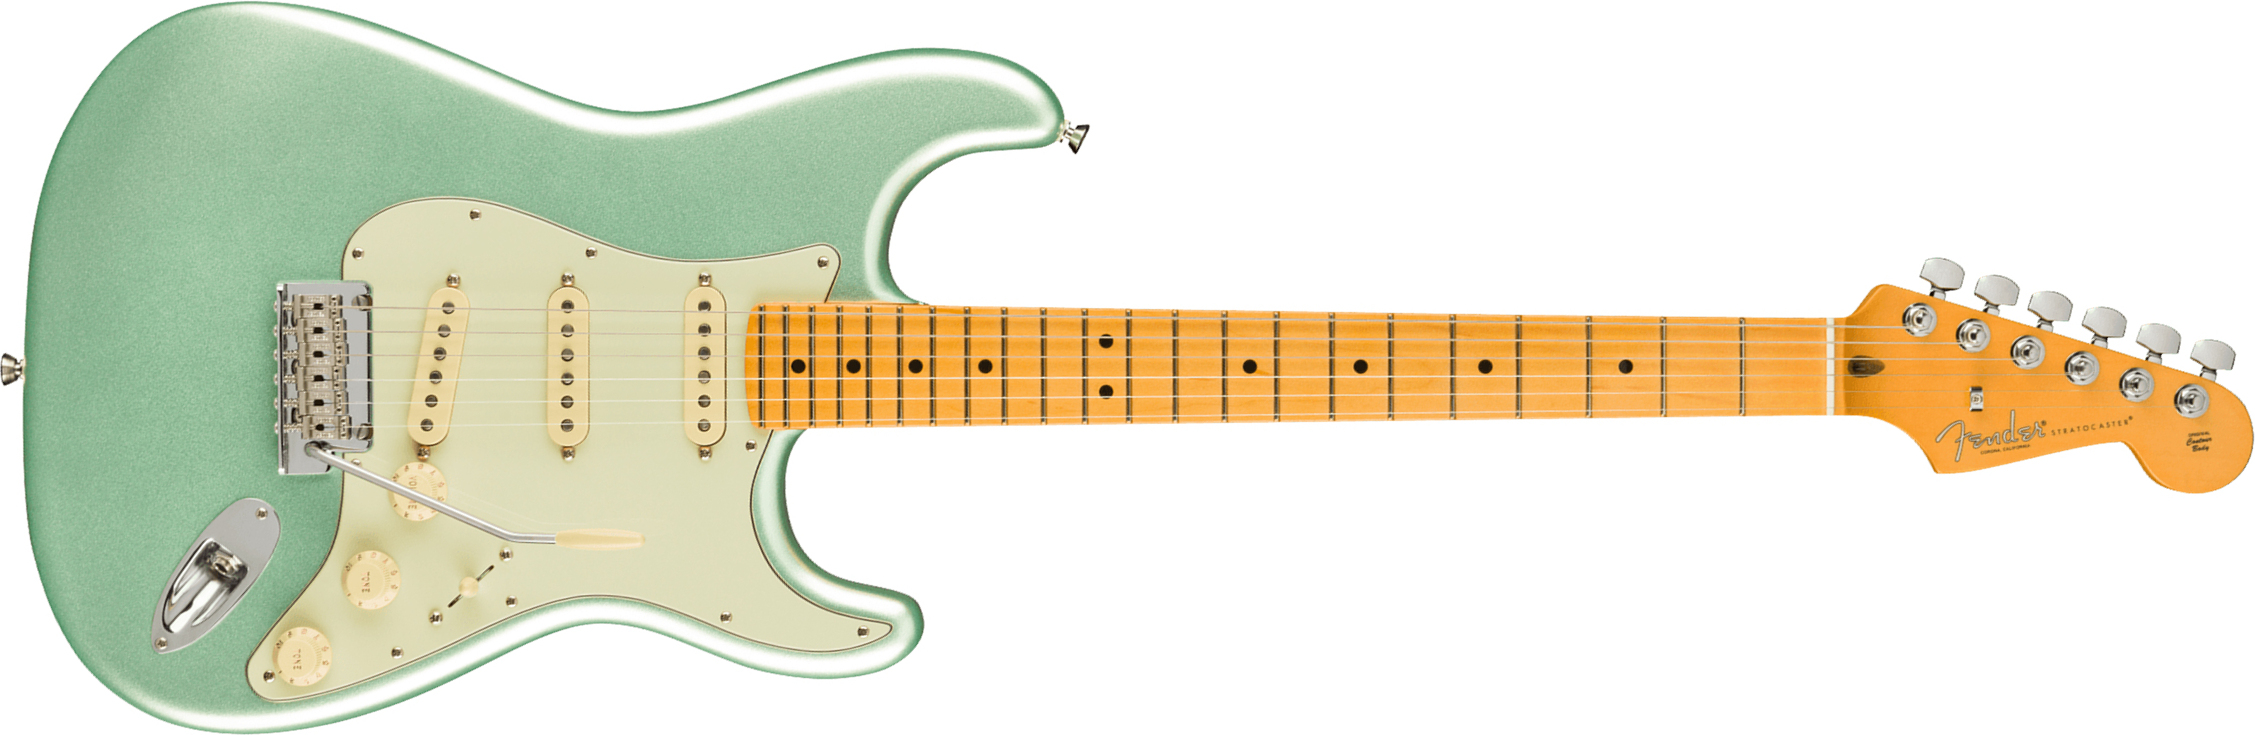 Fender Strat American Professional Ii Usa Mn - Mystic Surf Green - Elektrische gitaar in Str-vorm - Main picture